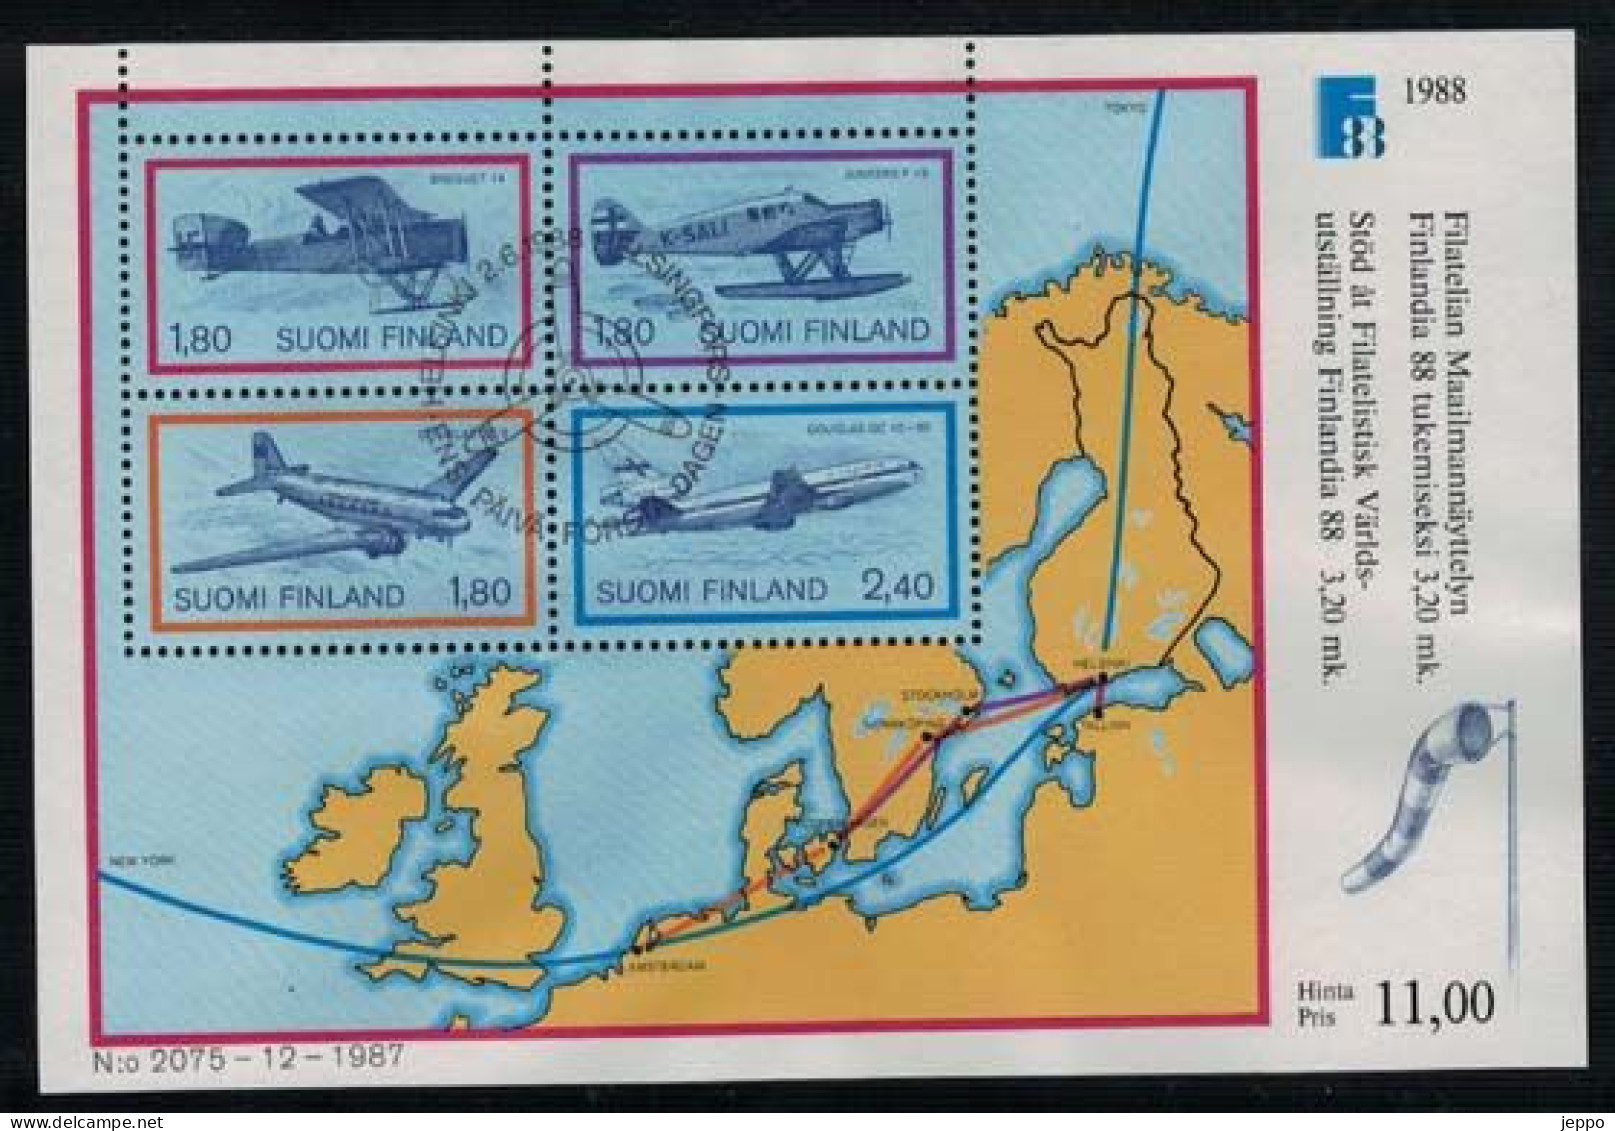 1988 Finland Michel Bl 4, Finlandia 88 Aeroplanes, FD Stamped. - Blocks & Sheetlets